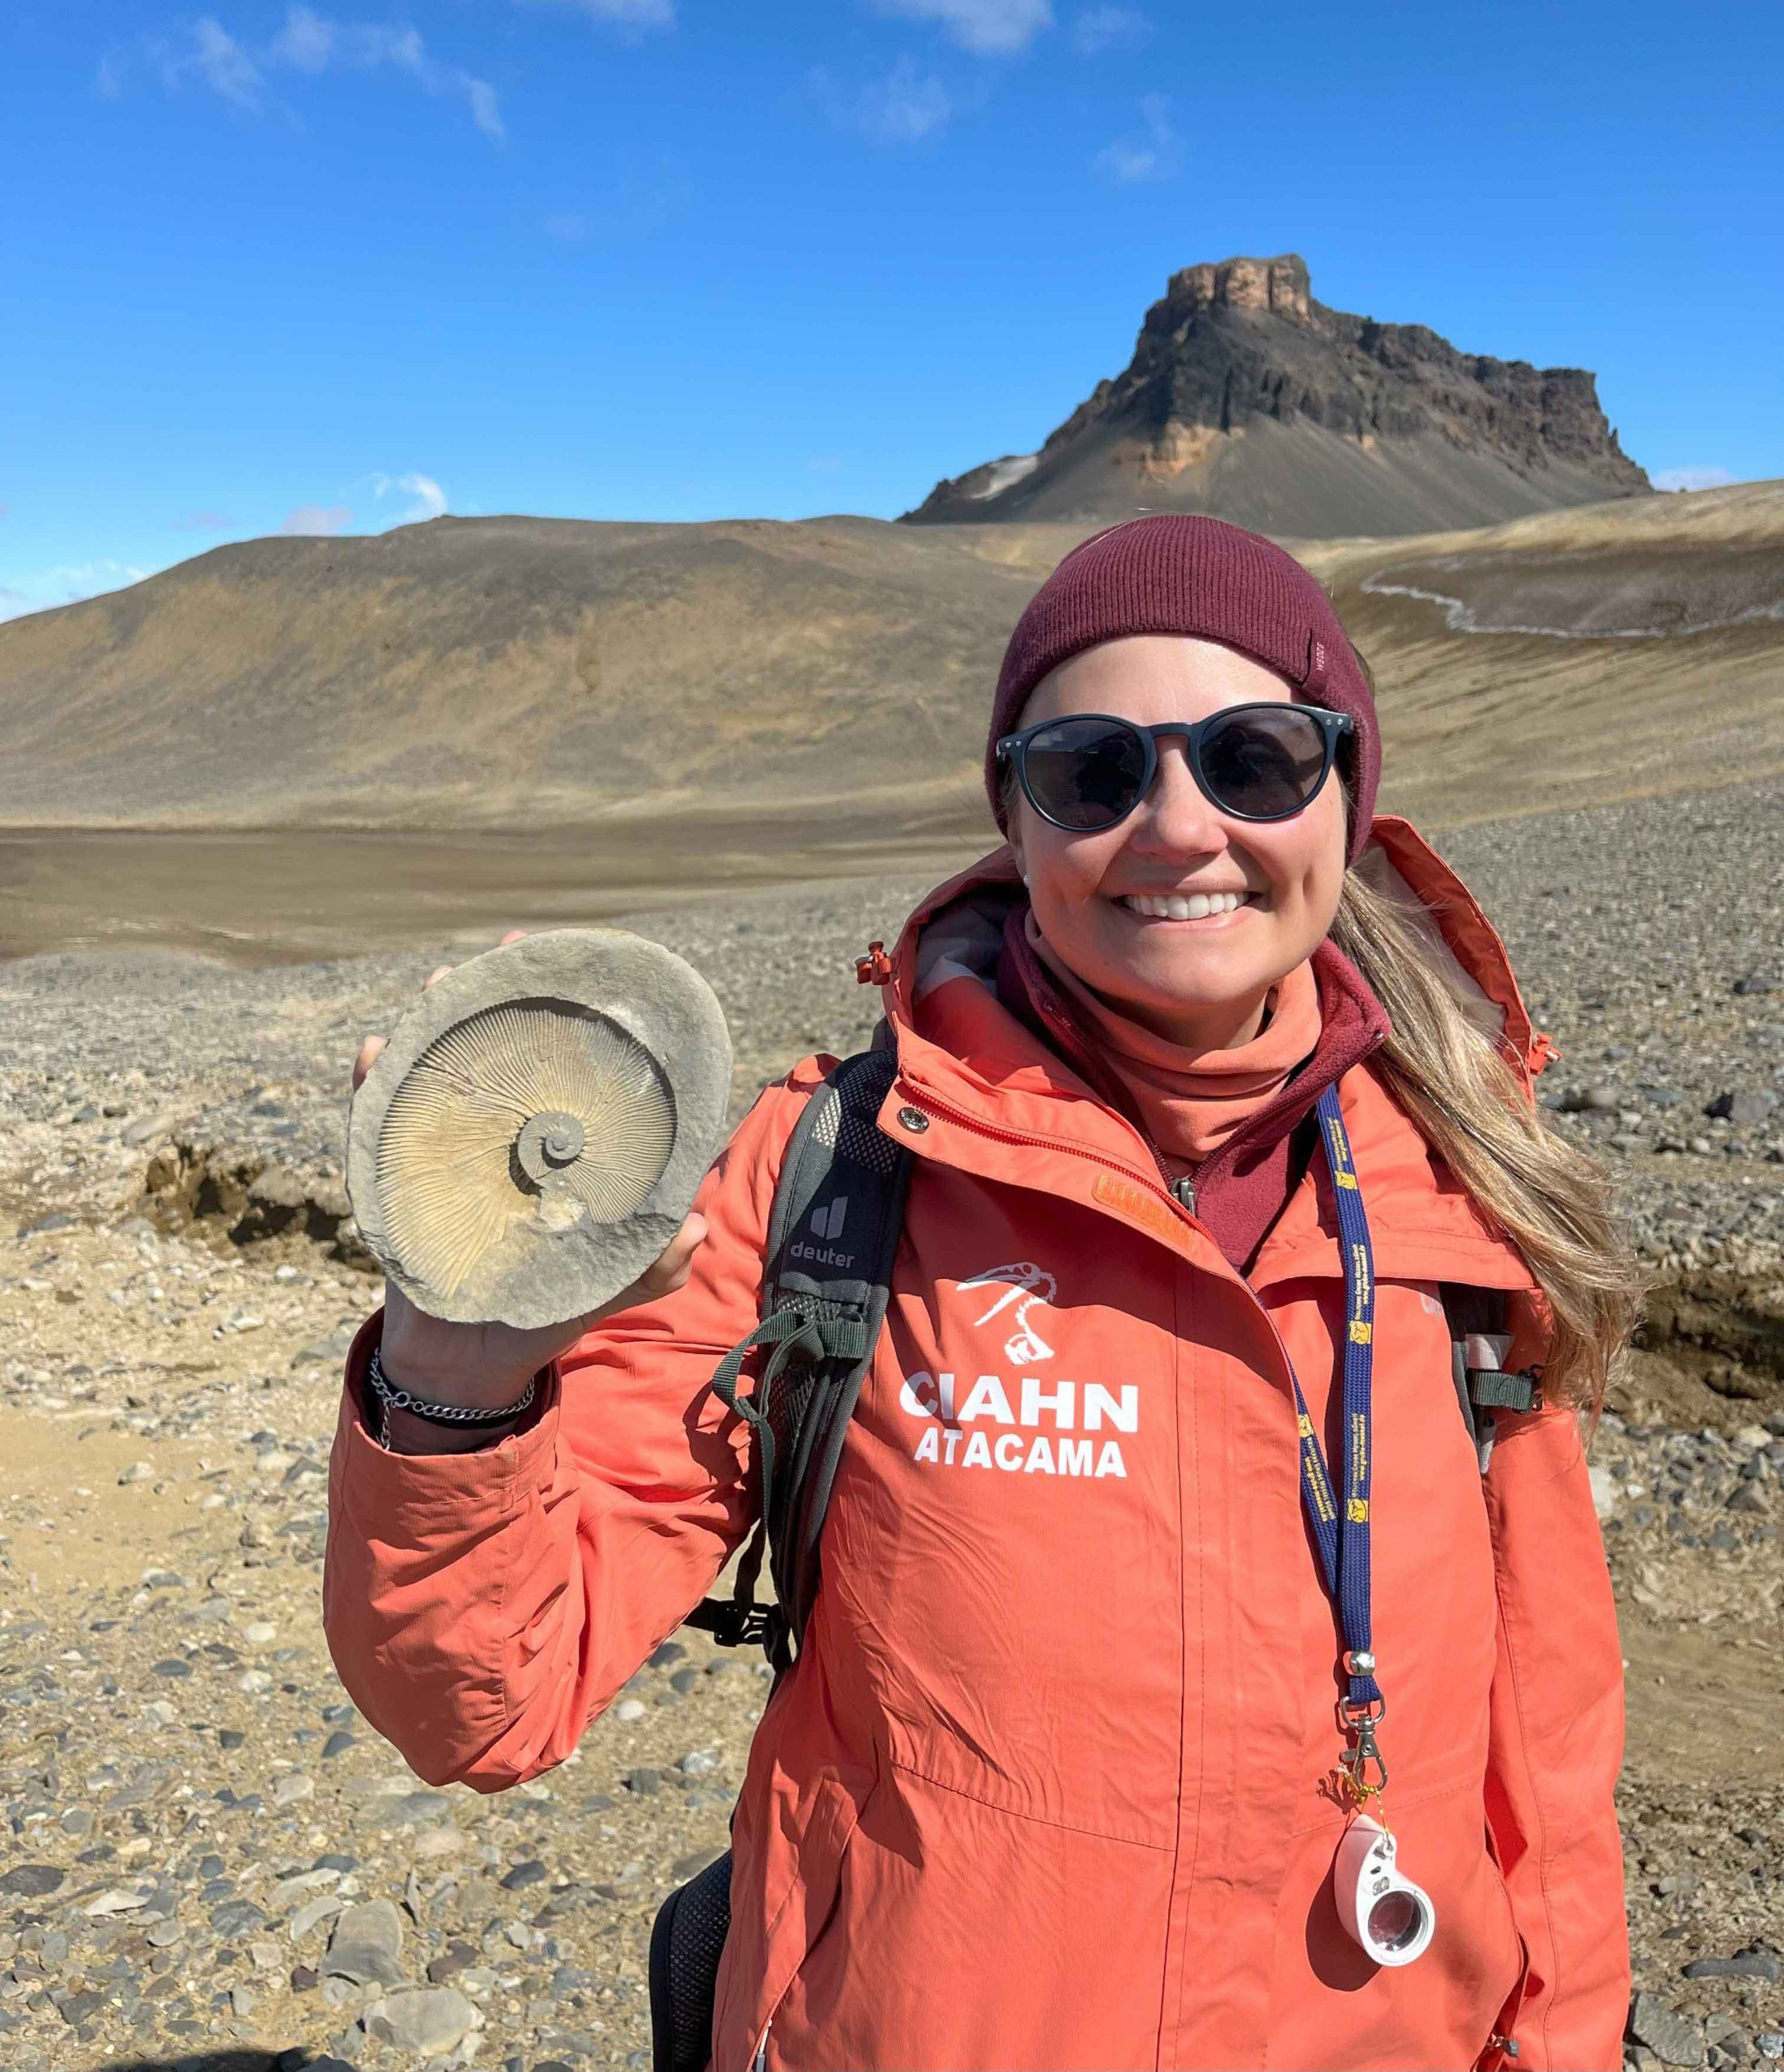 Investigadora de CIAHN Atacama regresa de exitosa expedición científica a la Antártica